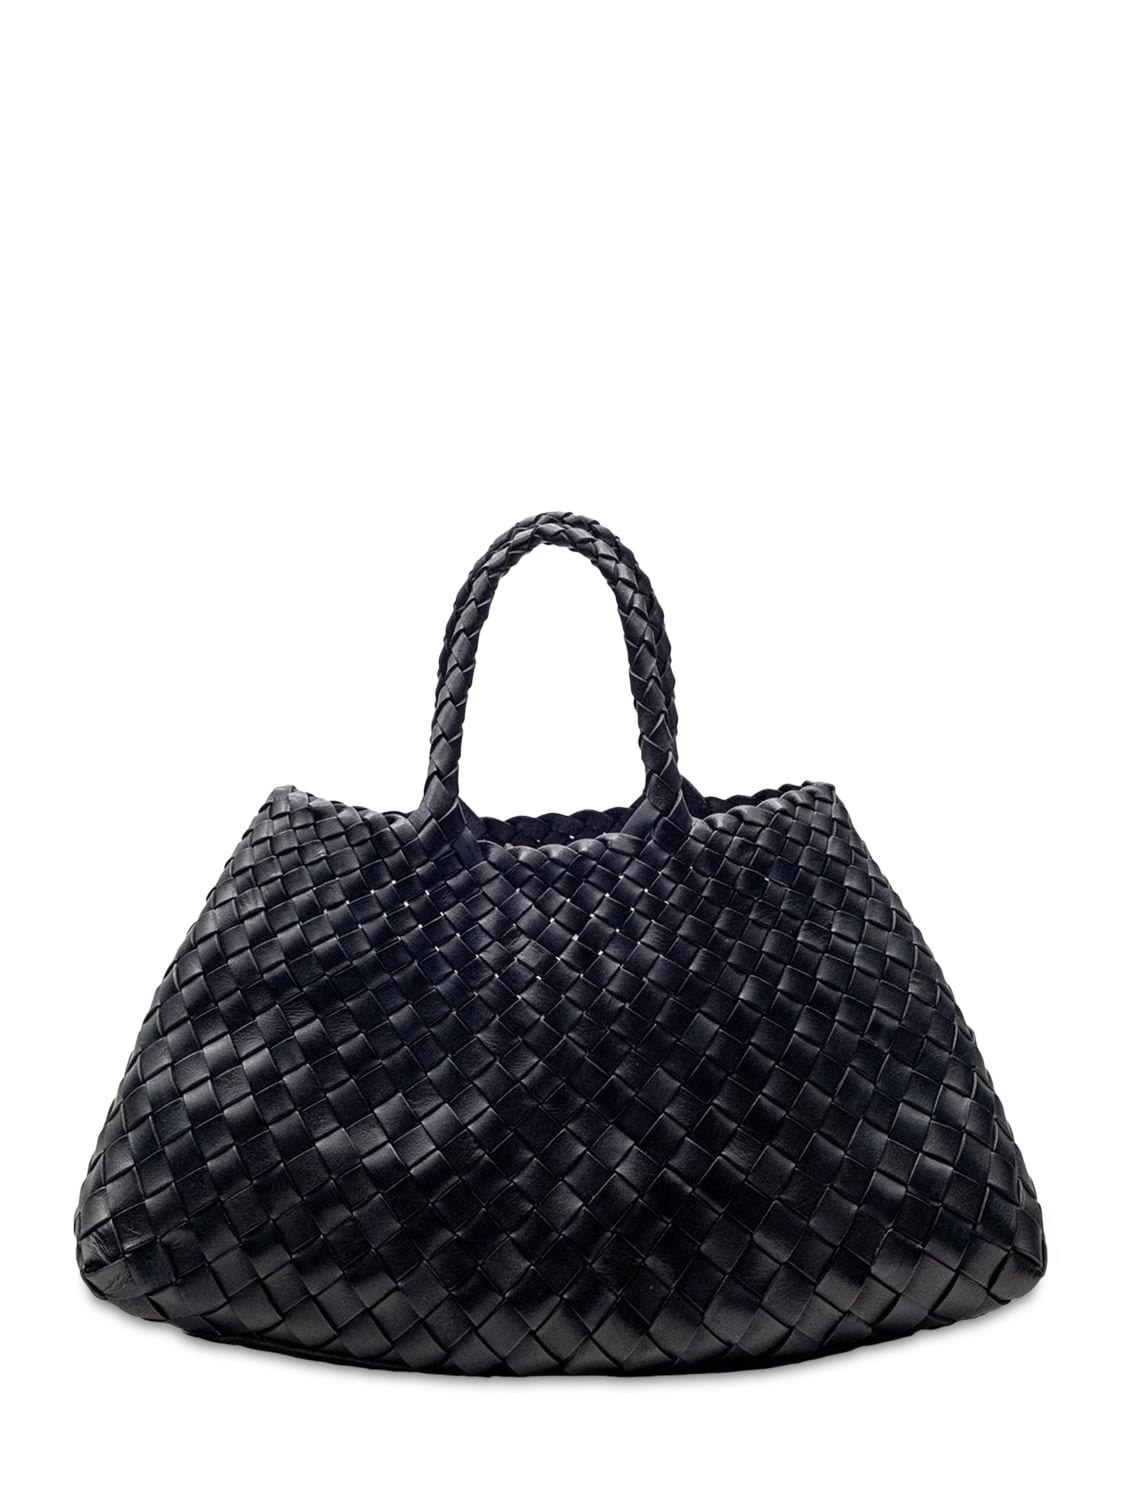 Image of Santa Croce Small Leather Bag